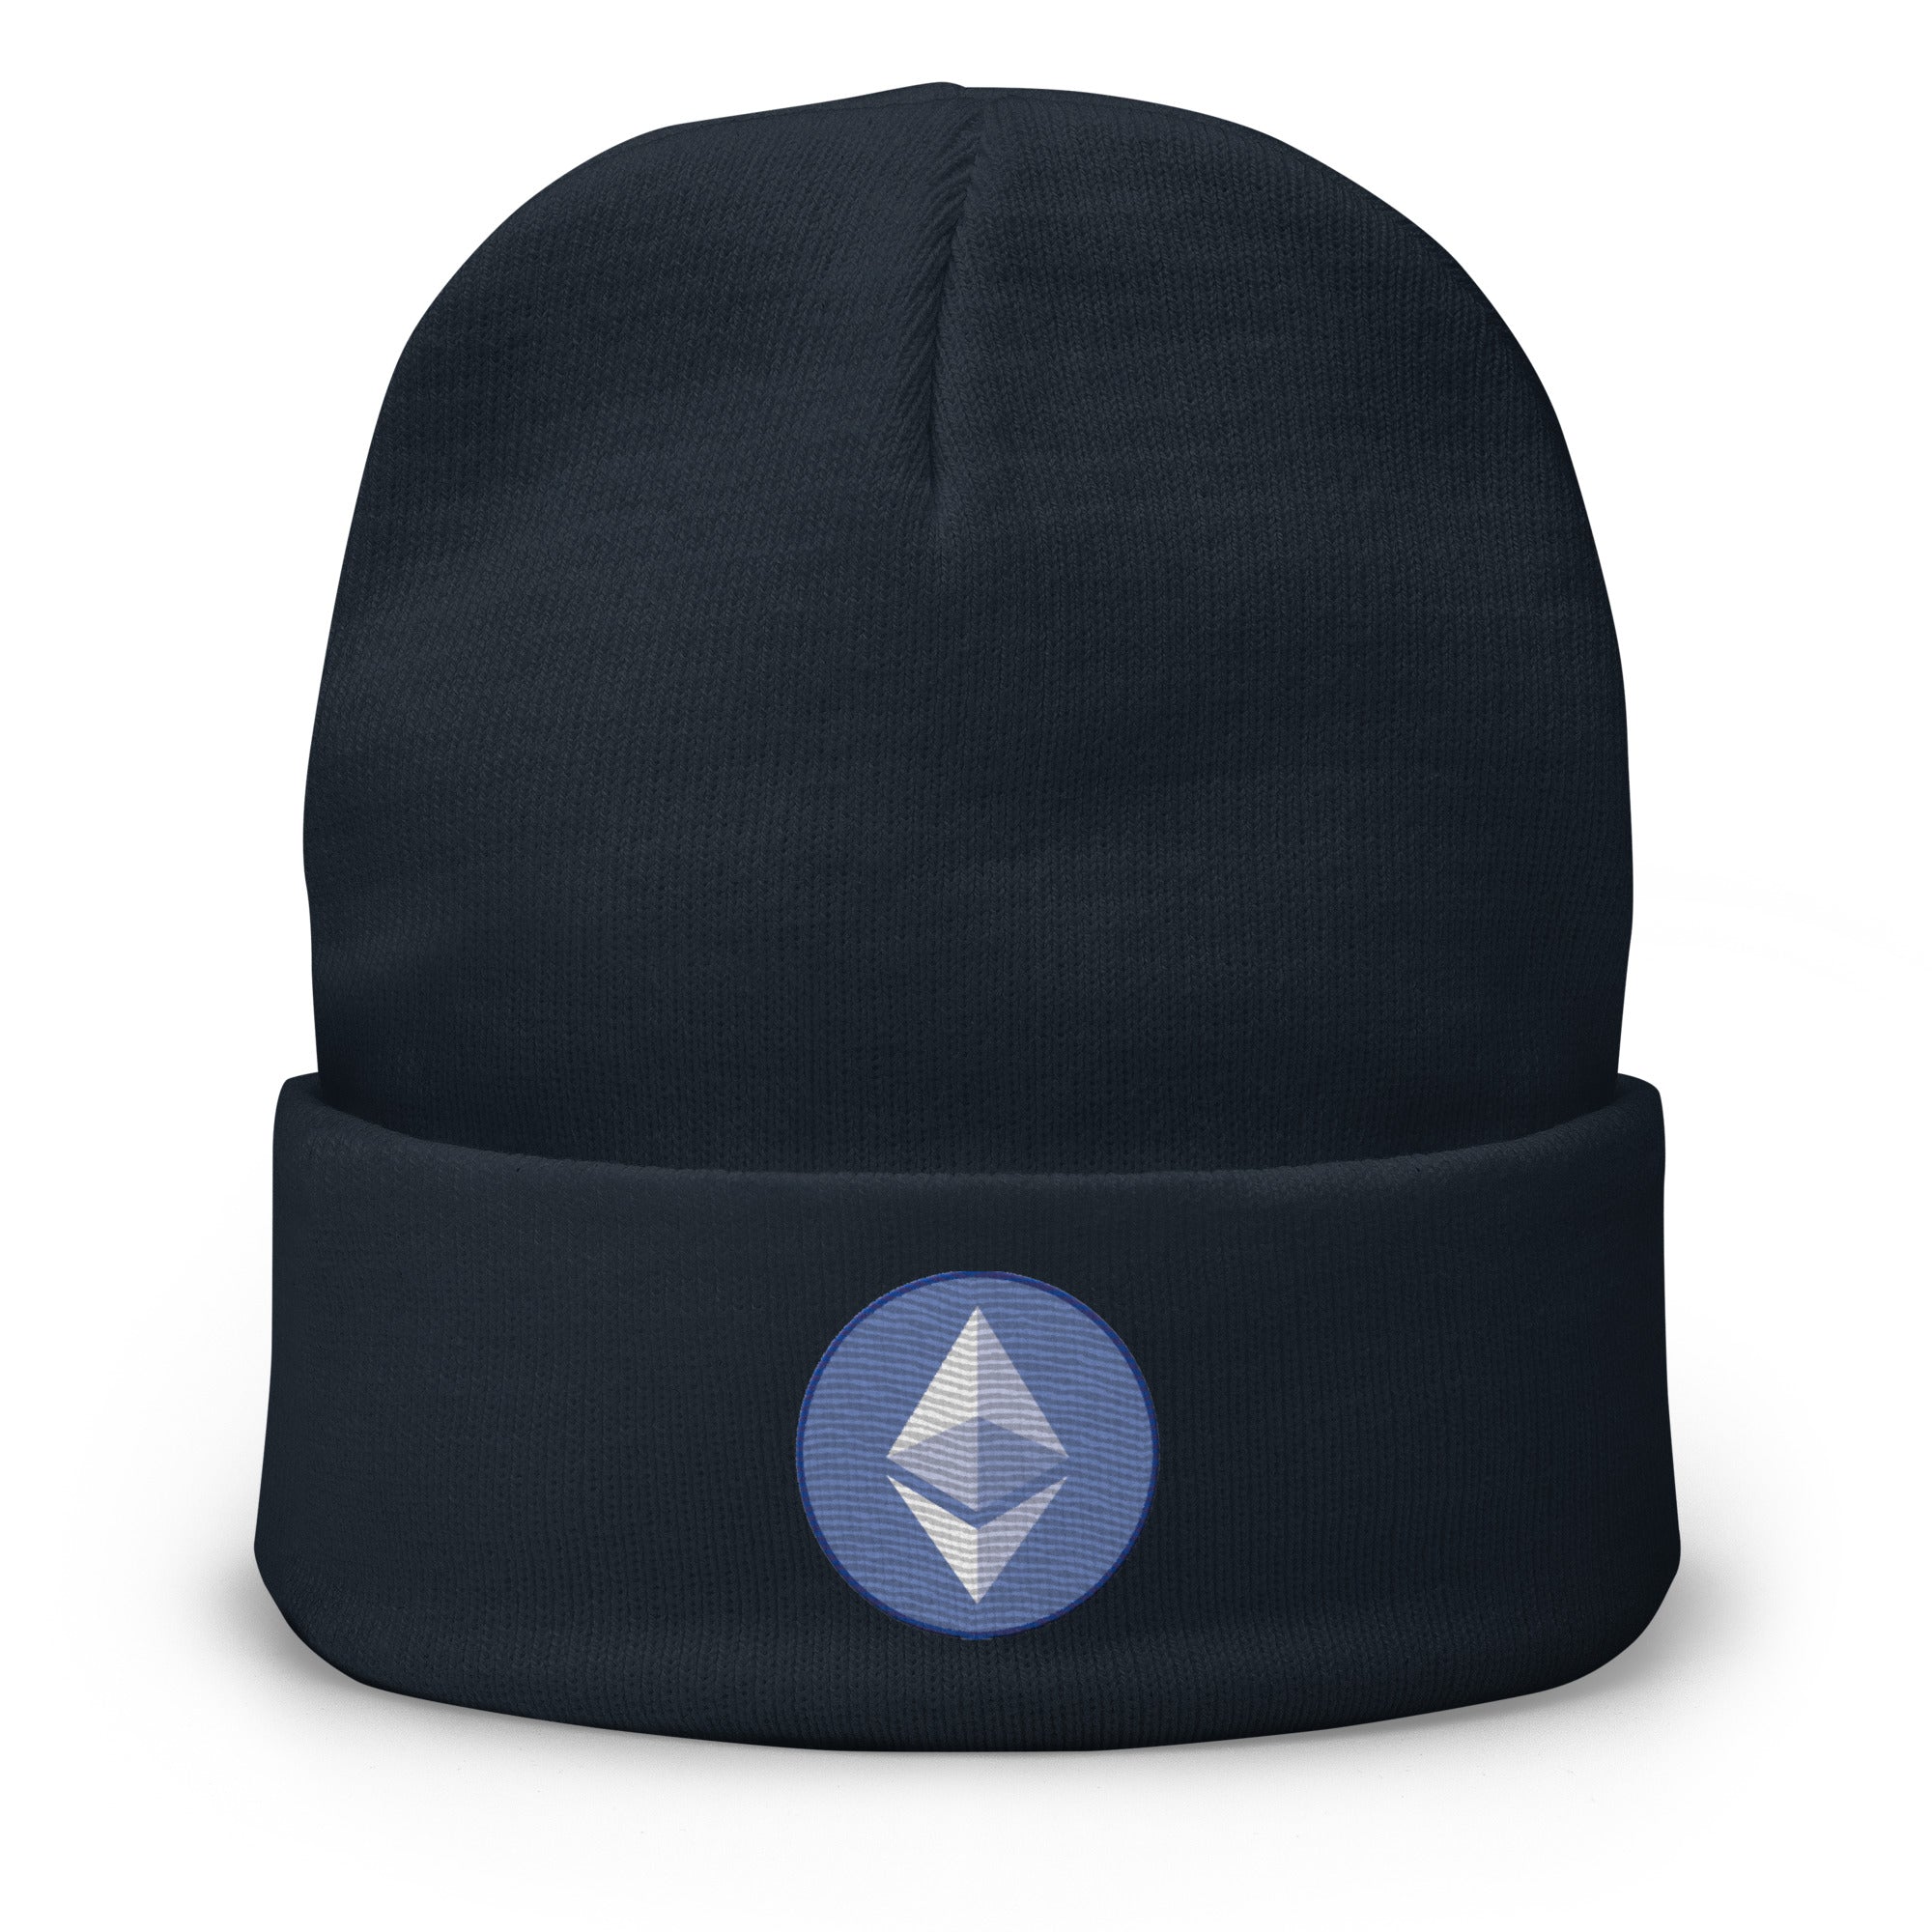 ETH Ethereum Round Logo Cryptocurrency Symbol Embroidered Cuff Beanie Cap